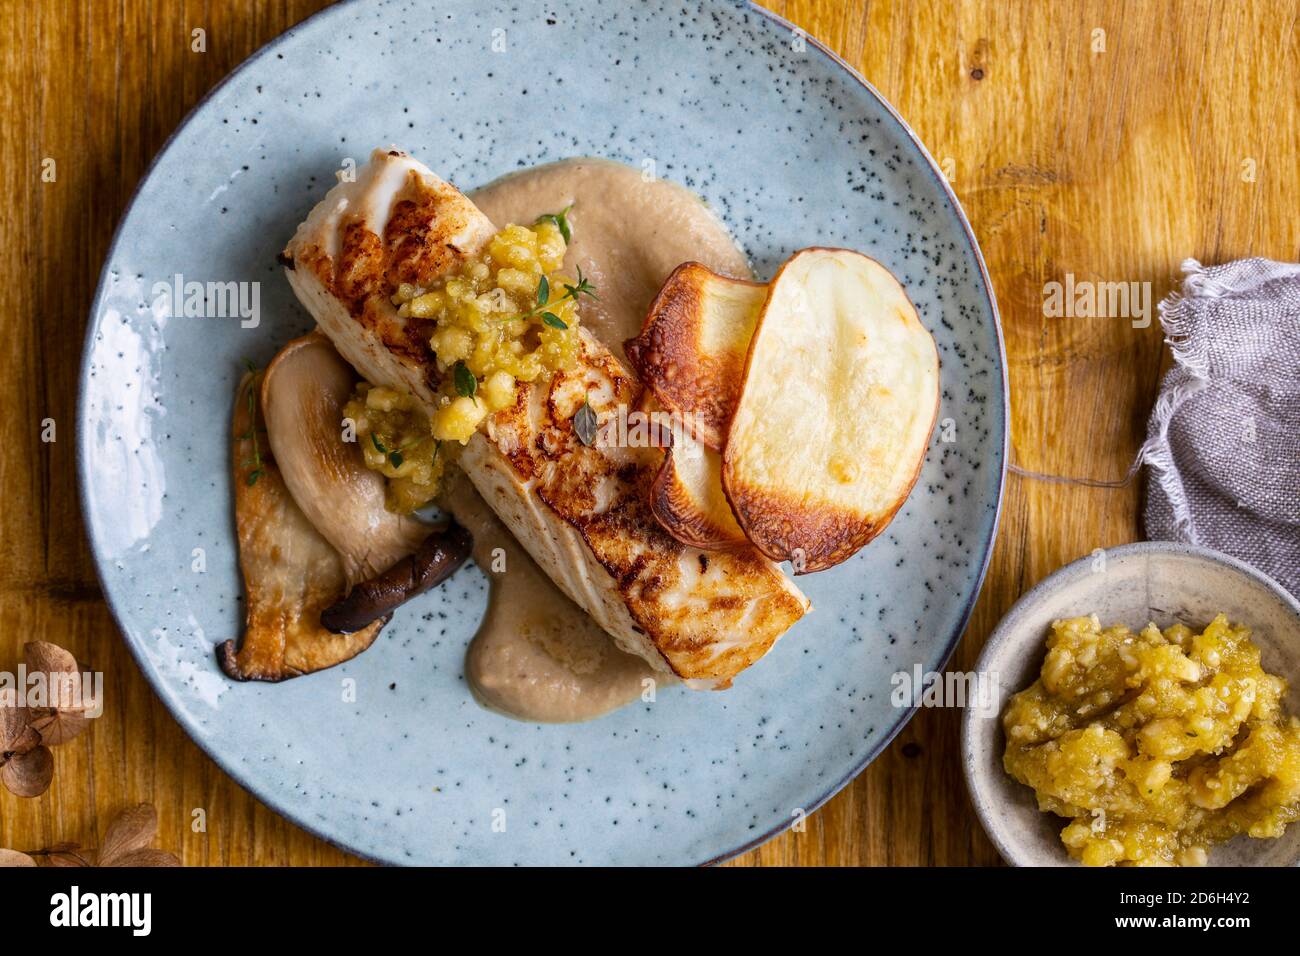 Pan fried halibut with mushroom velute, hazelnut pesto and potato crisps Stock Photo